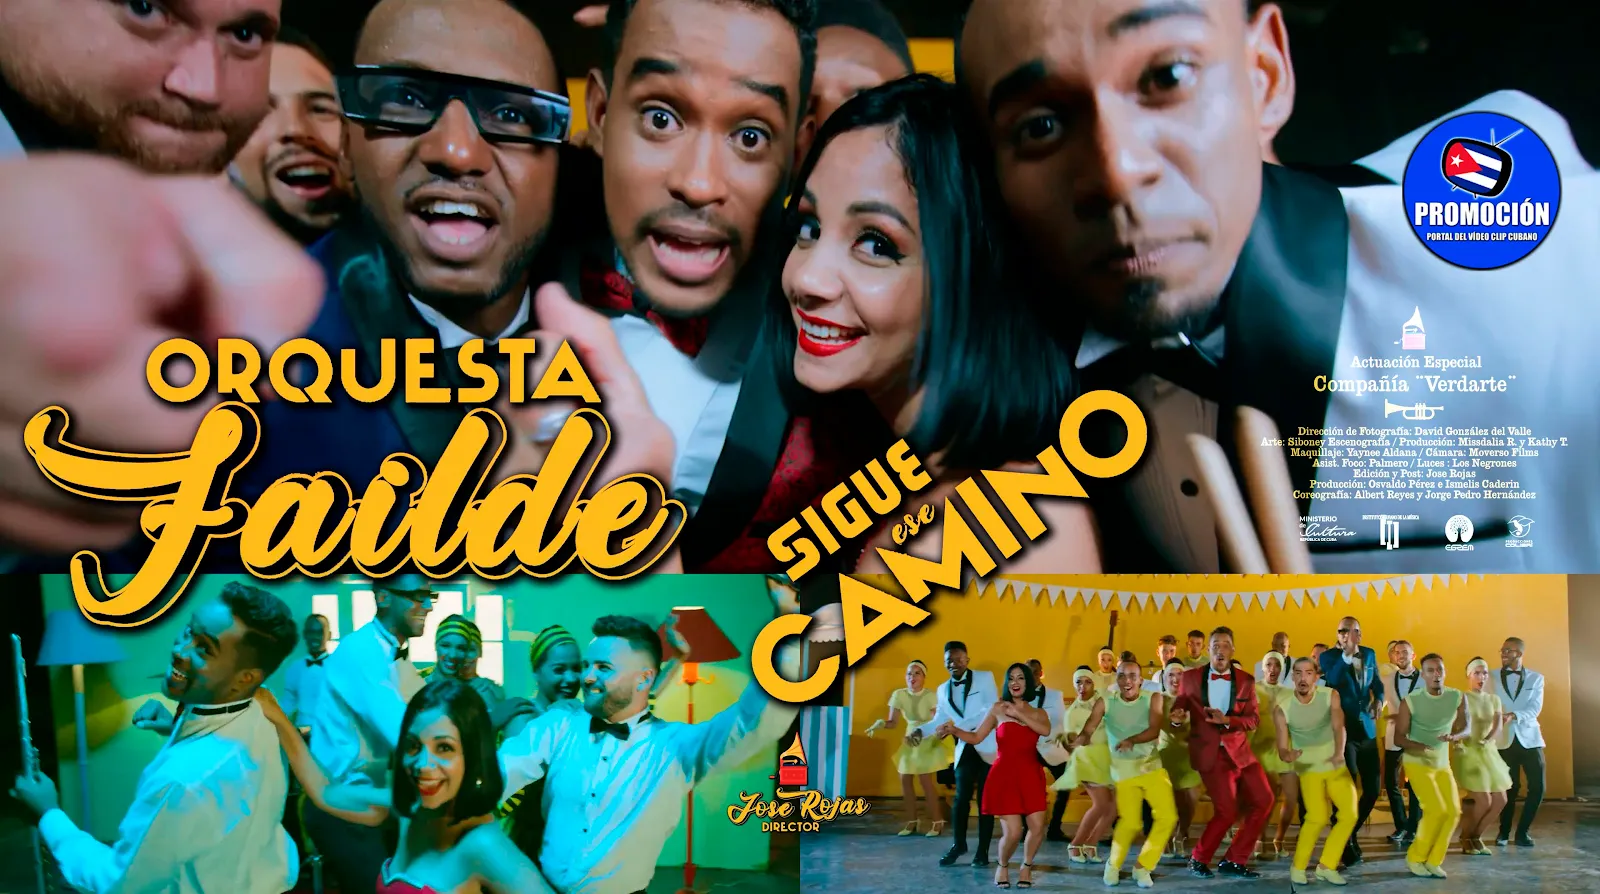 Orquesta Failde | ¨Sigue ese camino¨ | Director: Jose Rojas | Videoclip | Música Popular Bailable  Cubana | Artistas Cubanos | Canción | CUBA